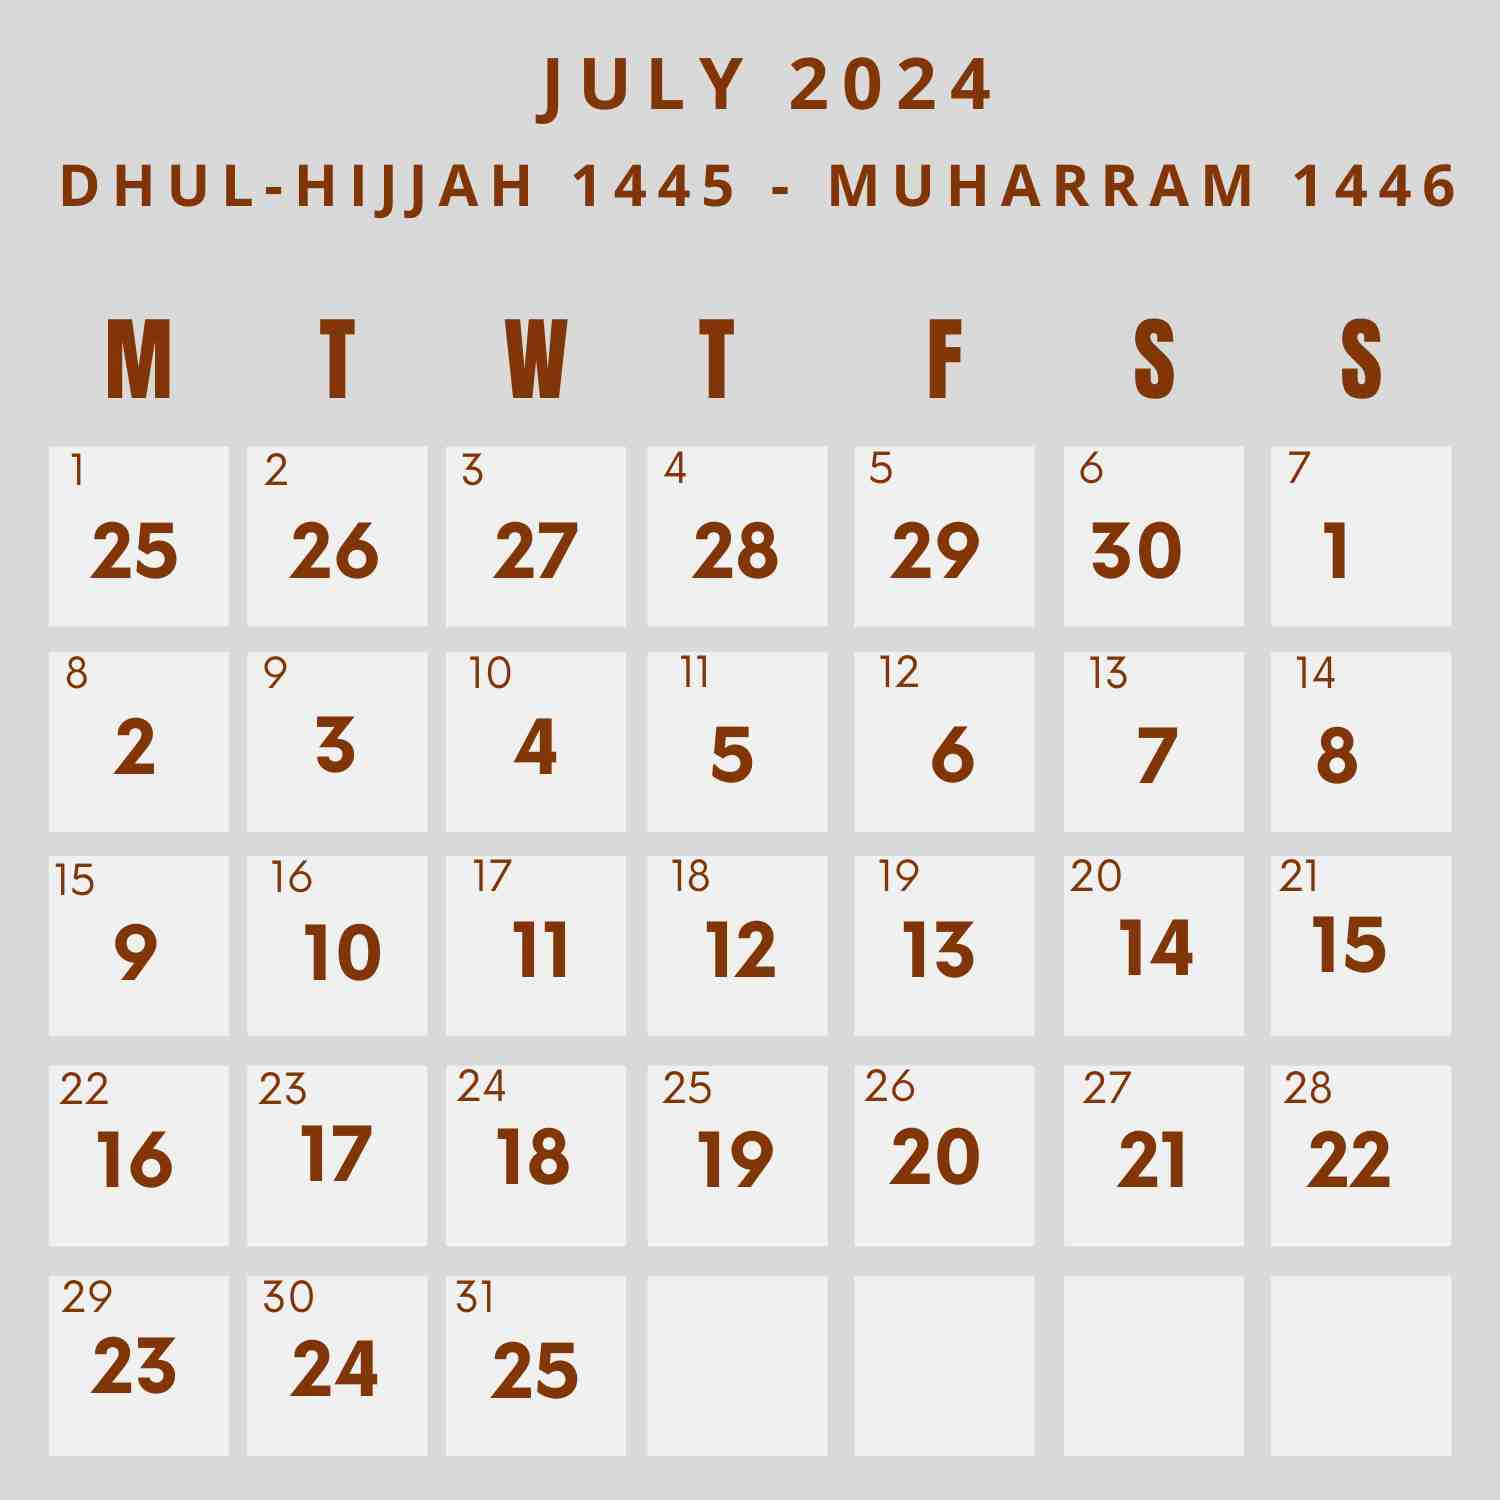 Islamic Calendar 2024 - Khwajadarbar pertaining to 7 July 2024 in Islamic Calendar